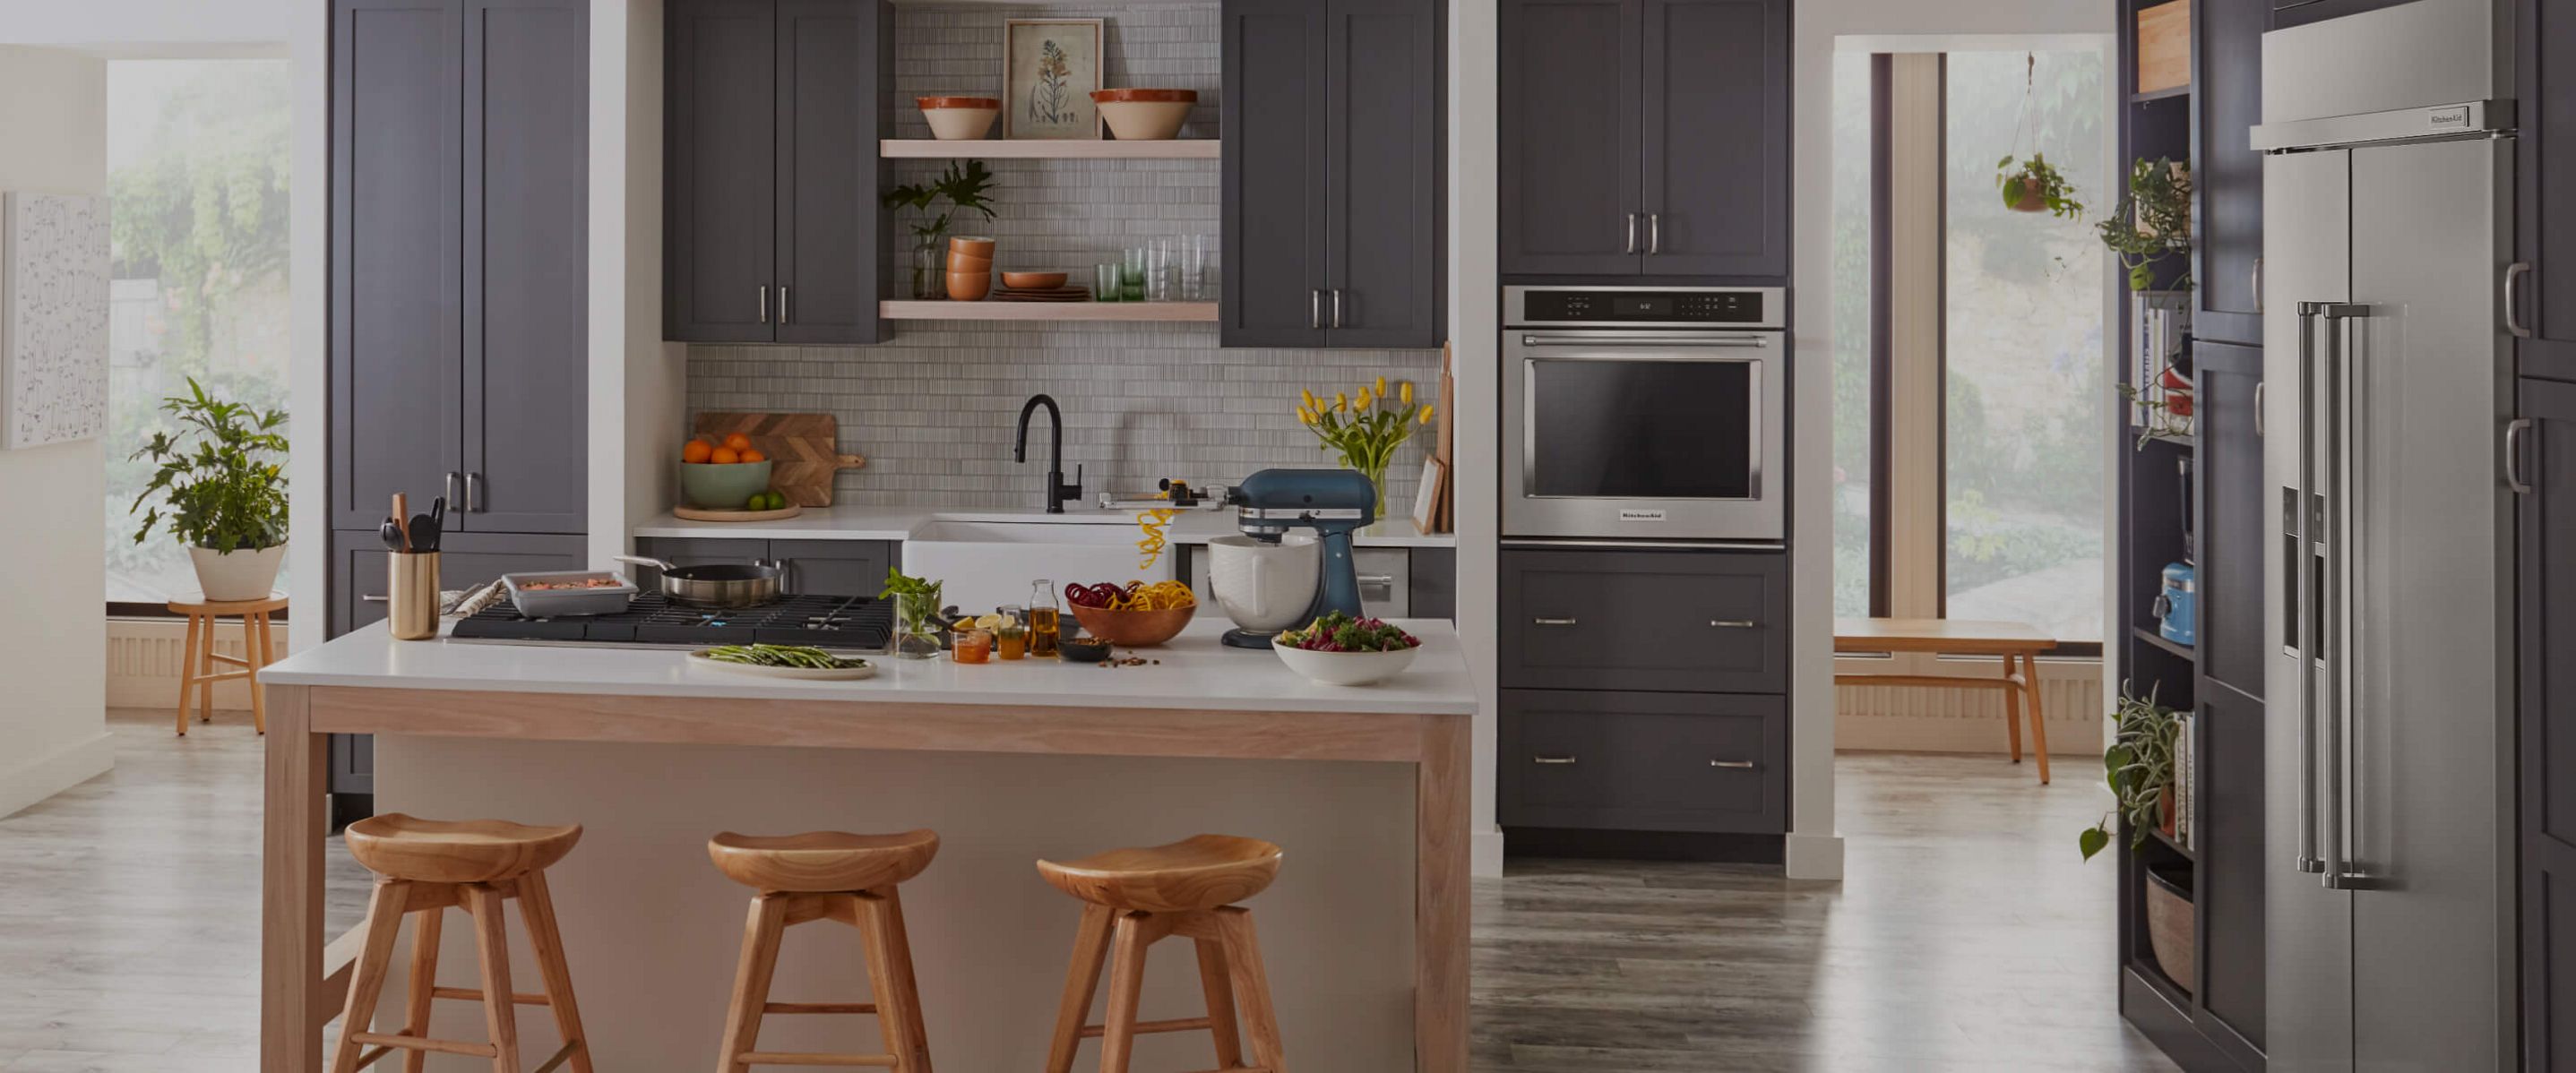 48" KitchenAid® Built-In Side-by-Side Refrigerator installed in kitchen